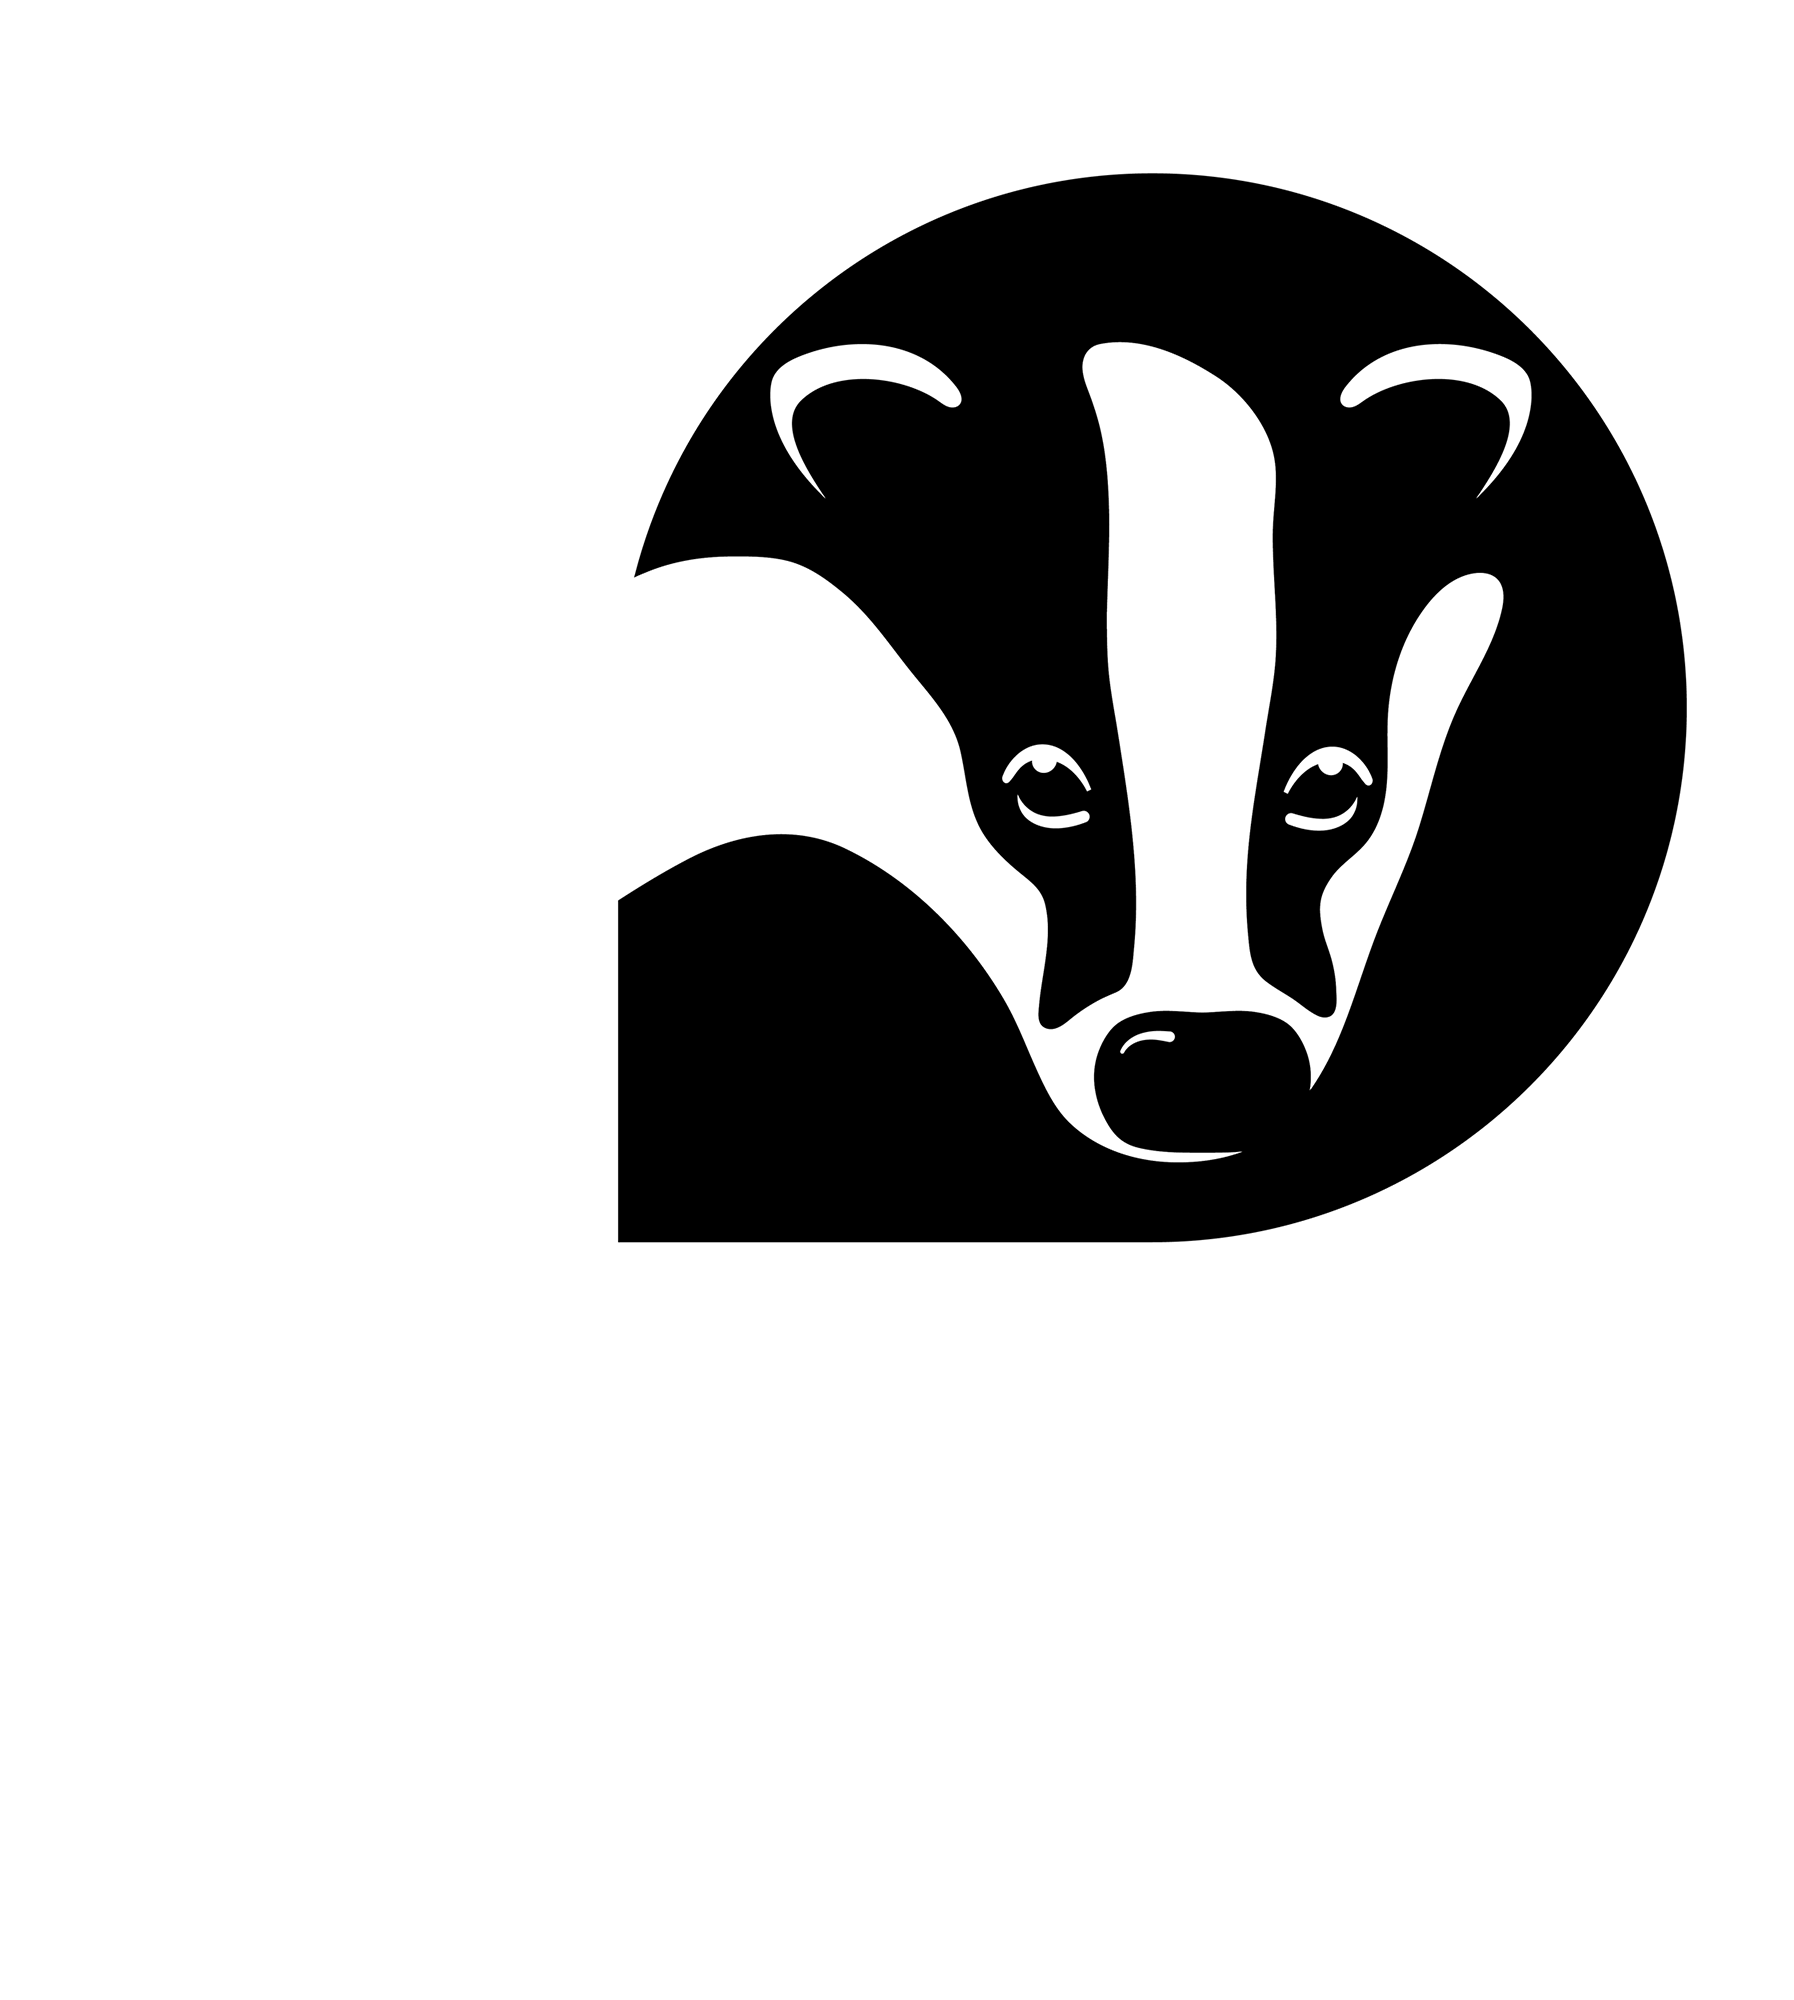 Wildlife Trusts Logo